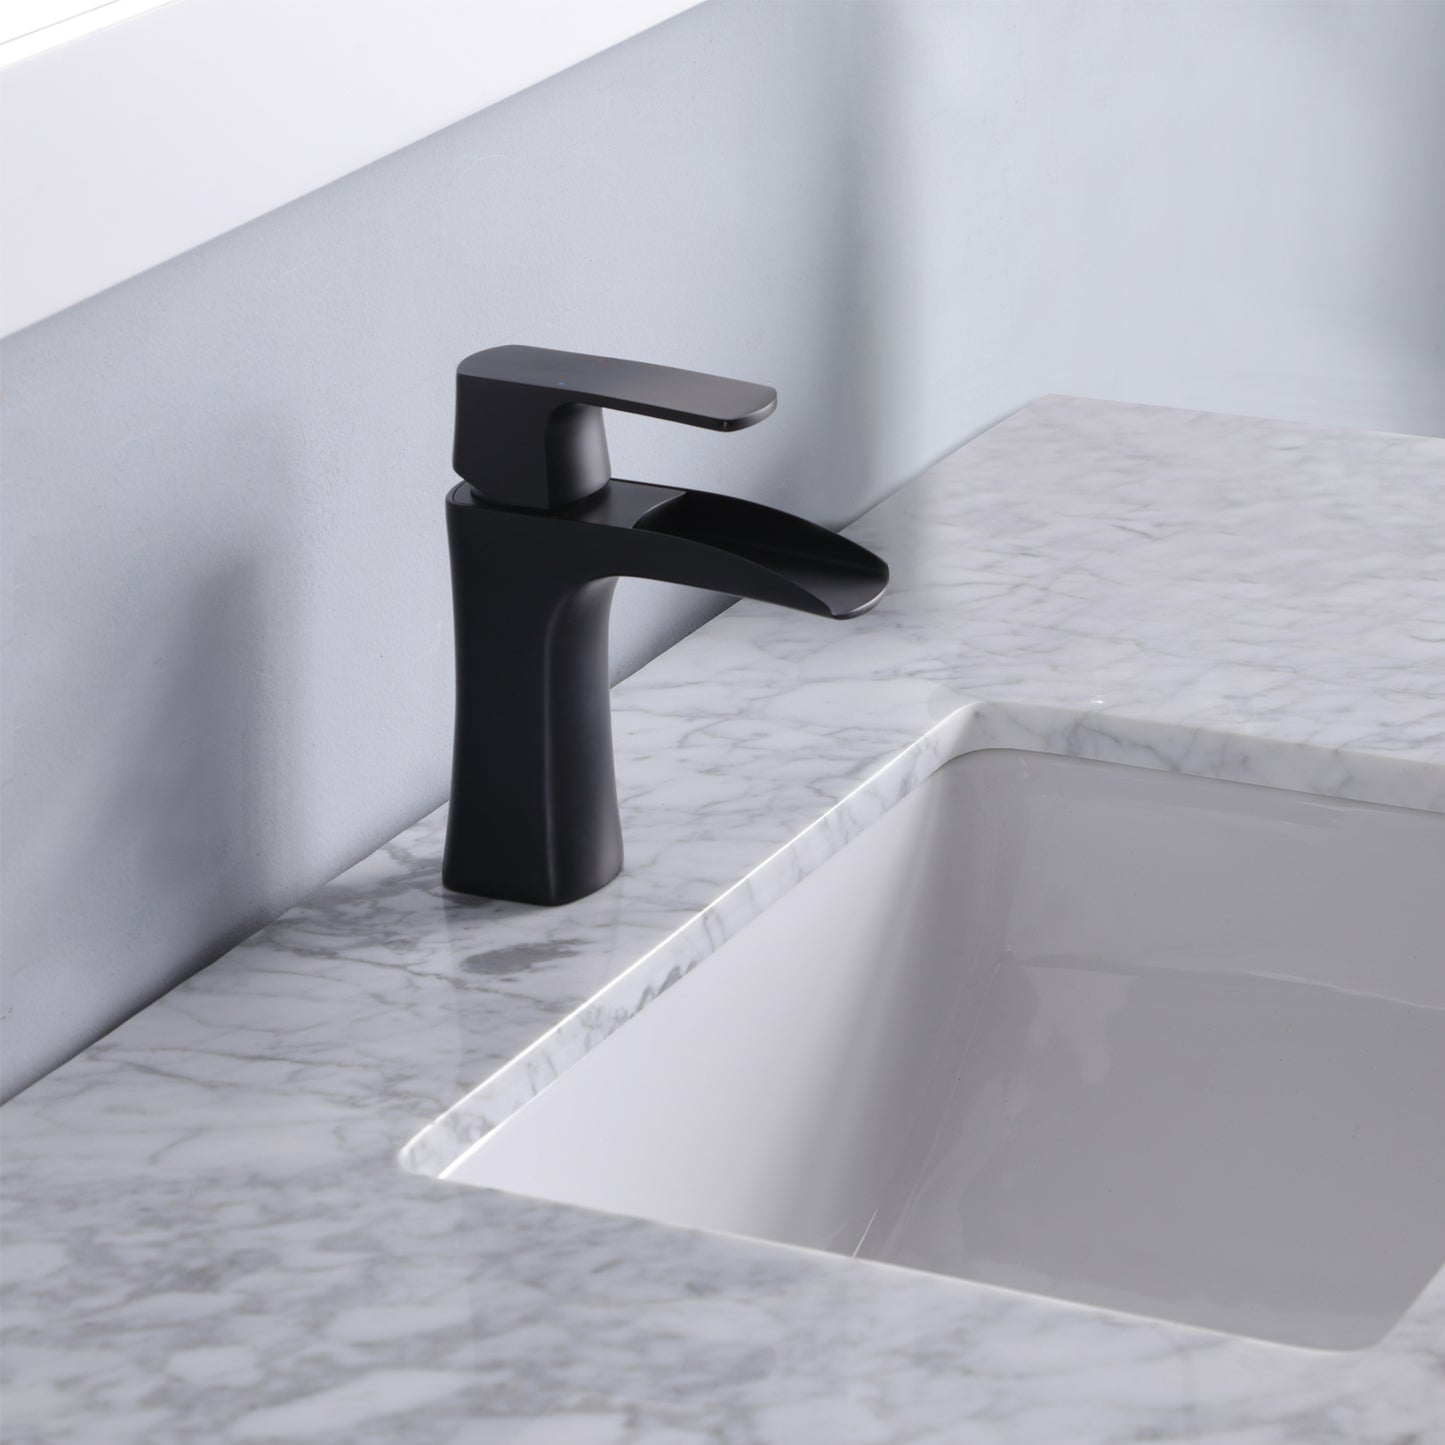 Maribella 48" Single Bathroom Vanity Set with Carrara White Marble Countertop -Altair Designs